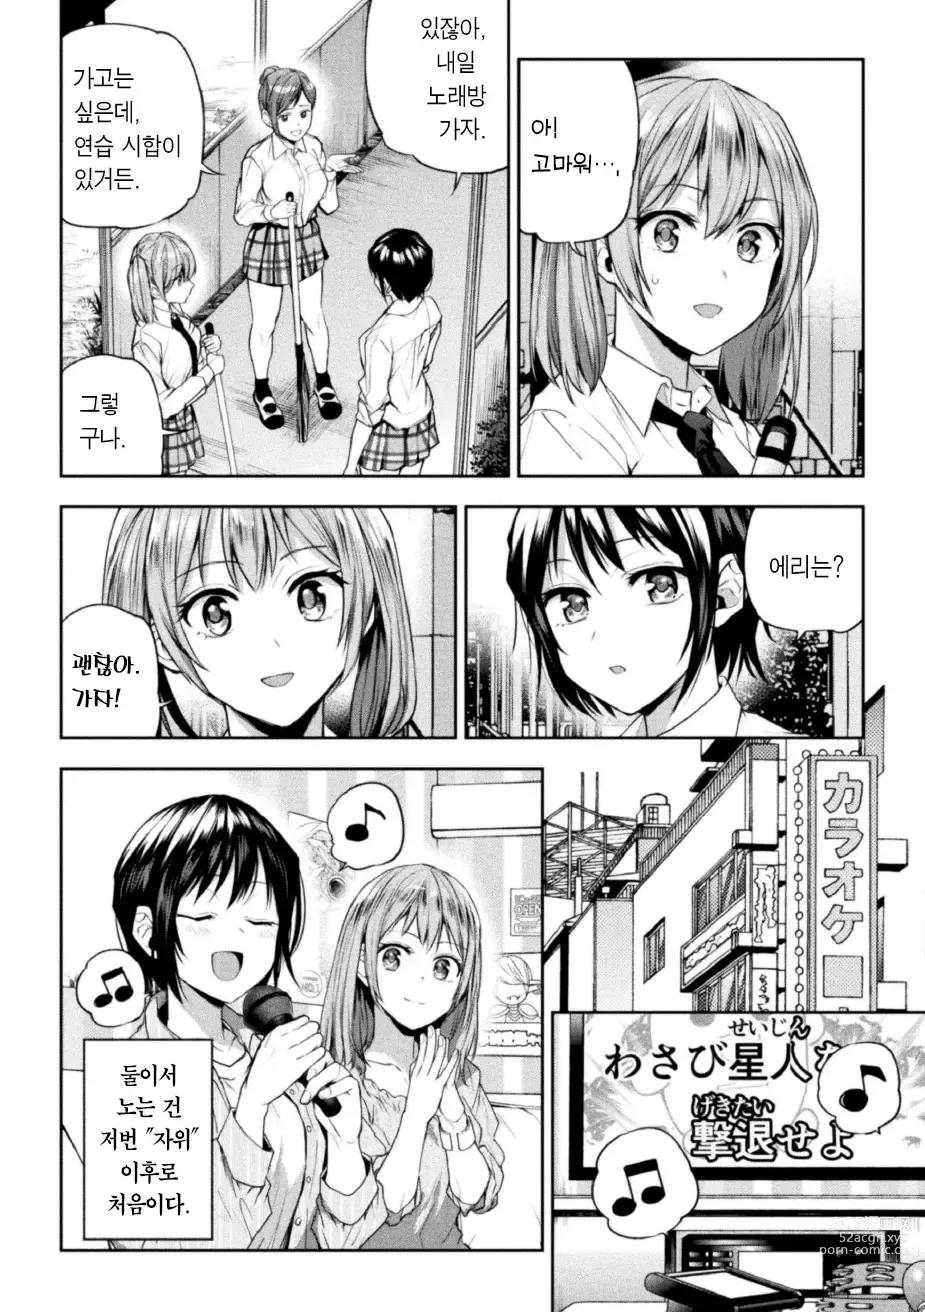 Page 6 of manga  둘이서 놀기 제3화